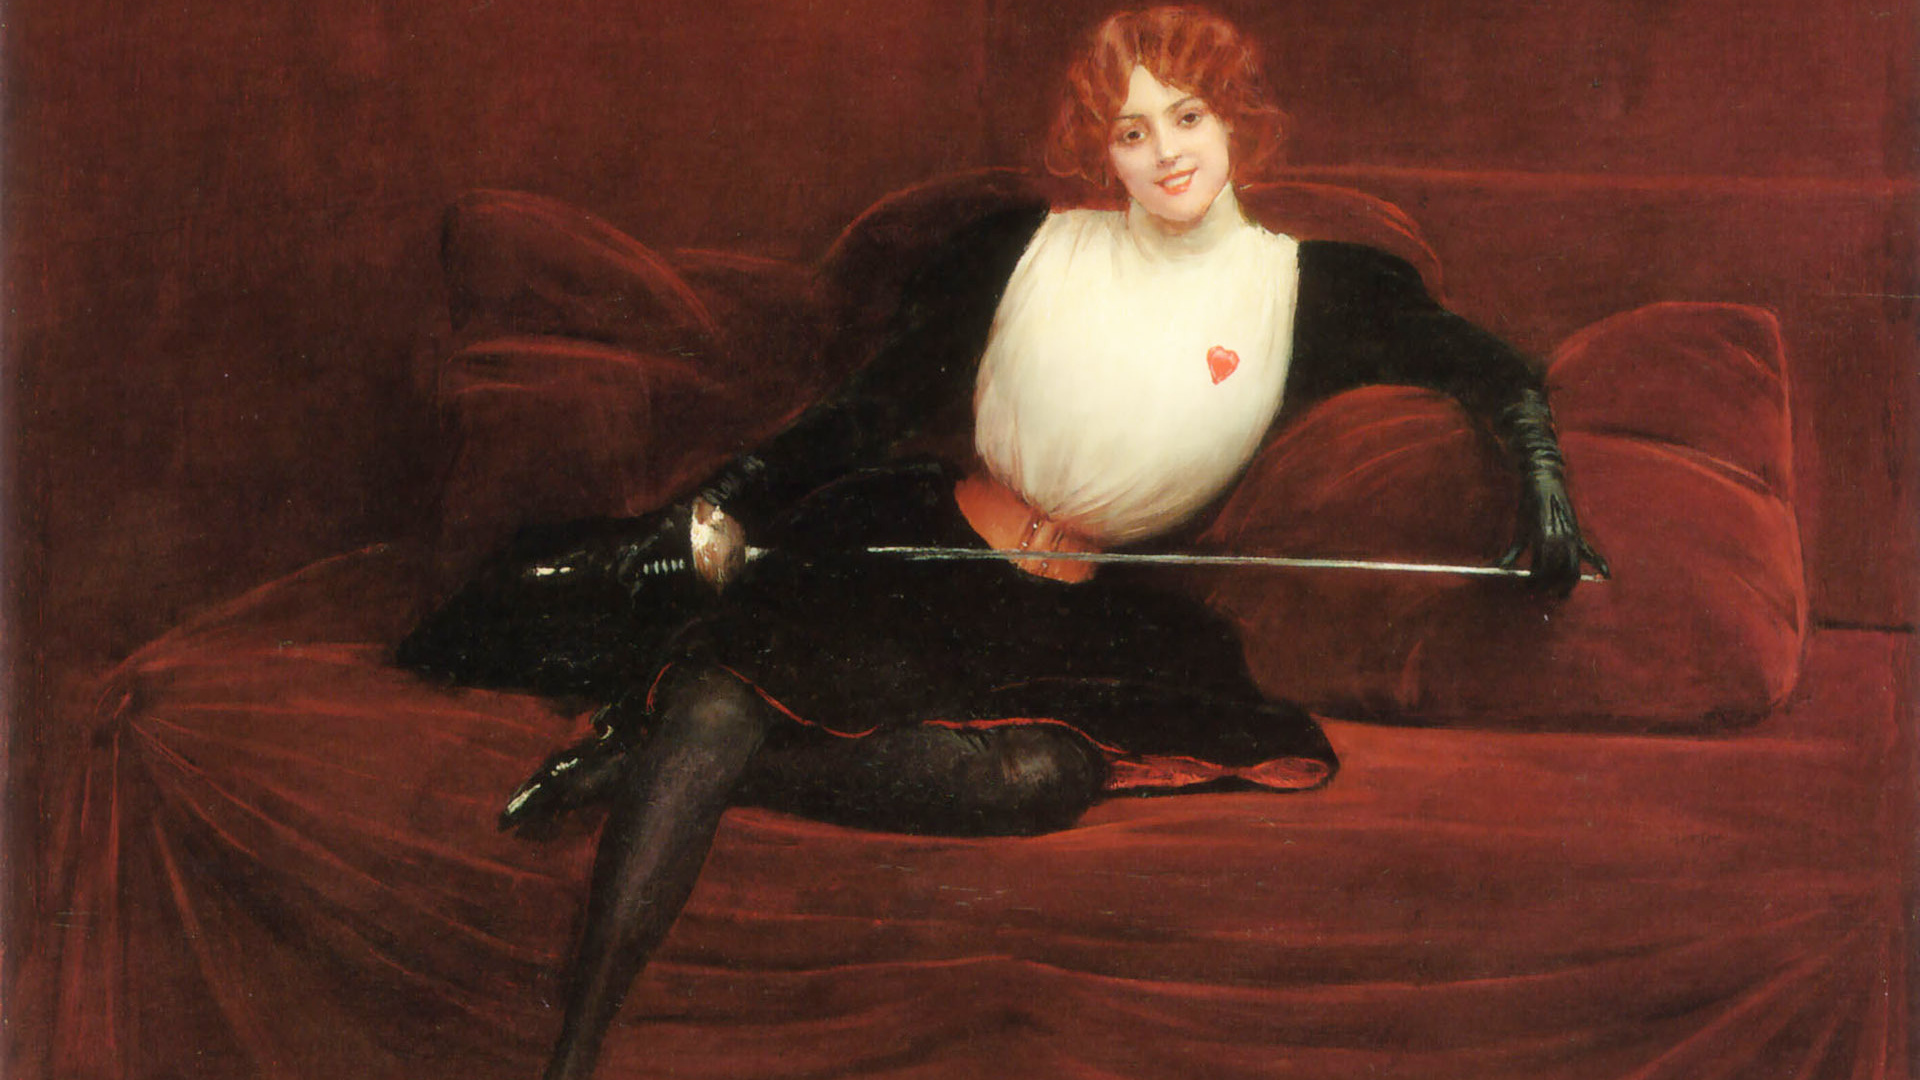 General 1920x1080 women redhead sword interior artwork painting Jean Beraud classic art